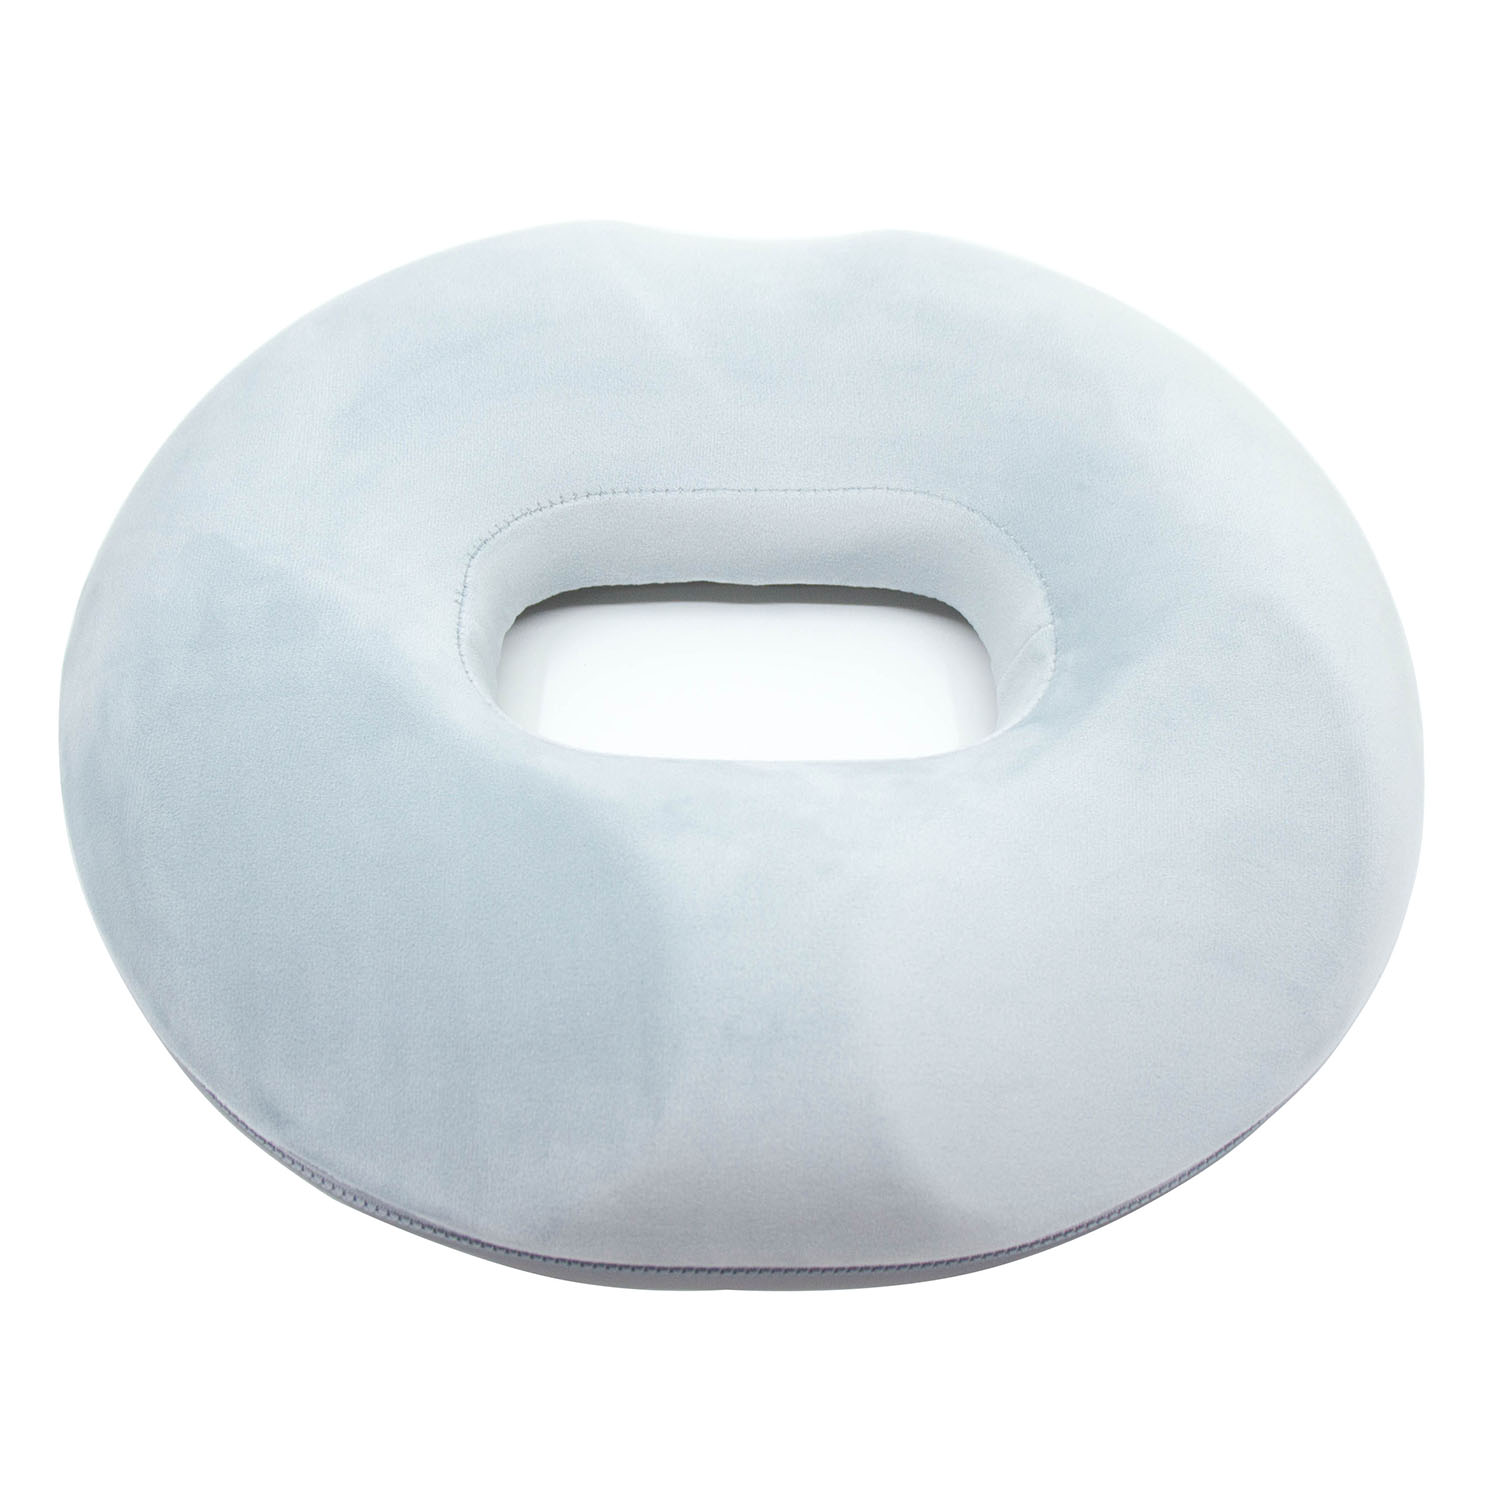 KarePro Premium Comfort Donut Seat Cushion/Pain Relief Orthopaedic